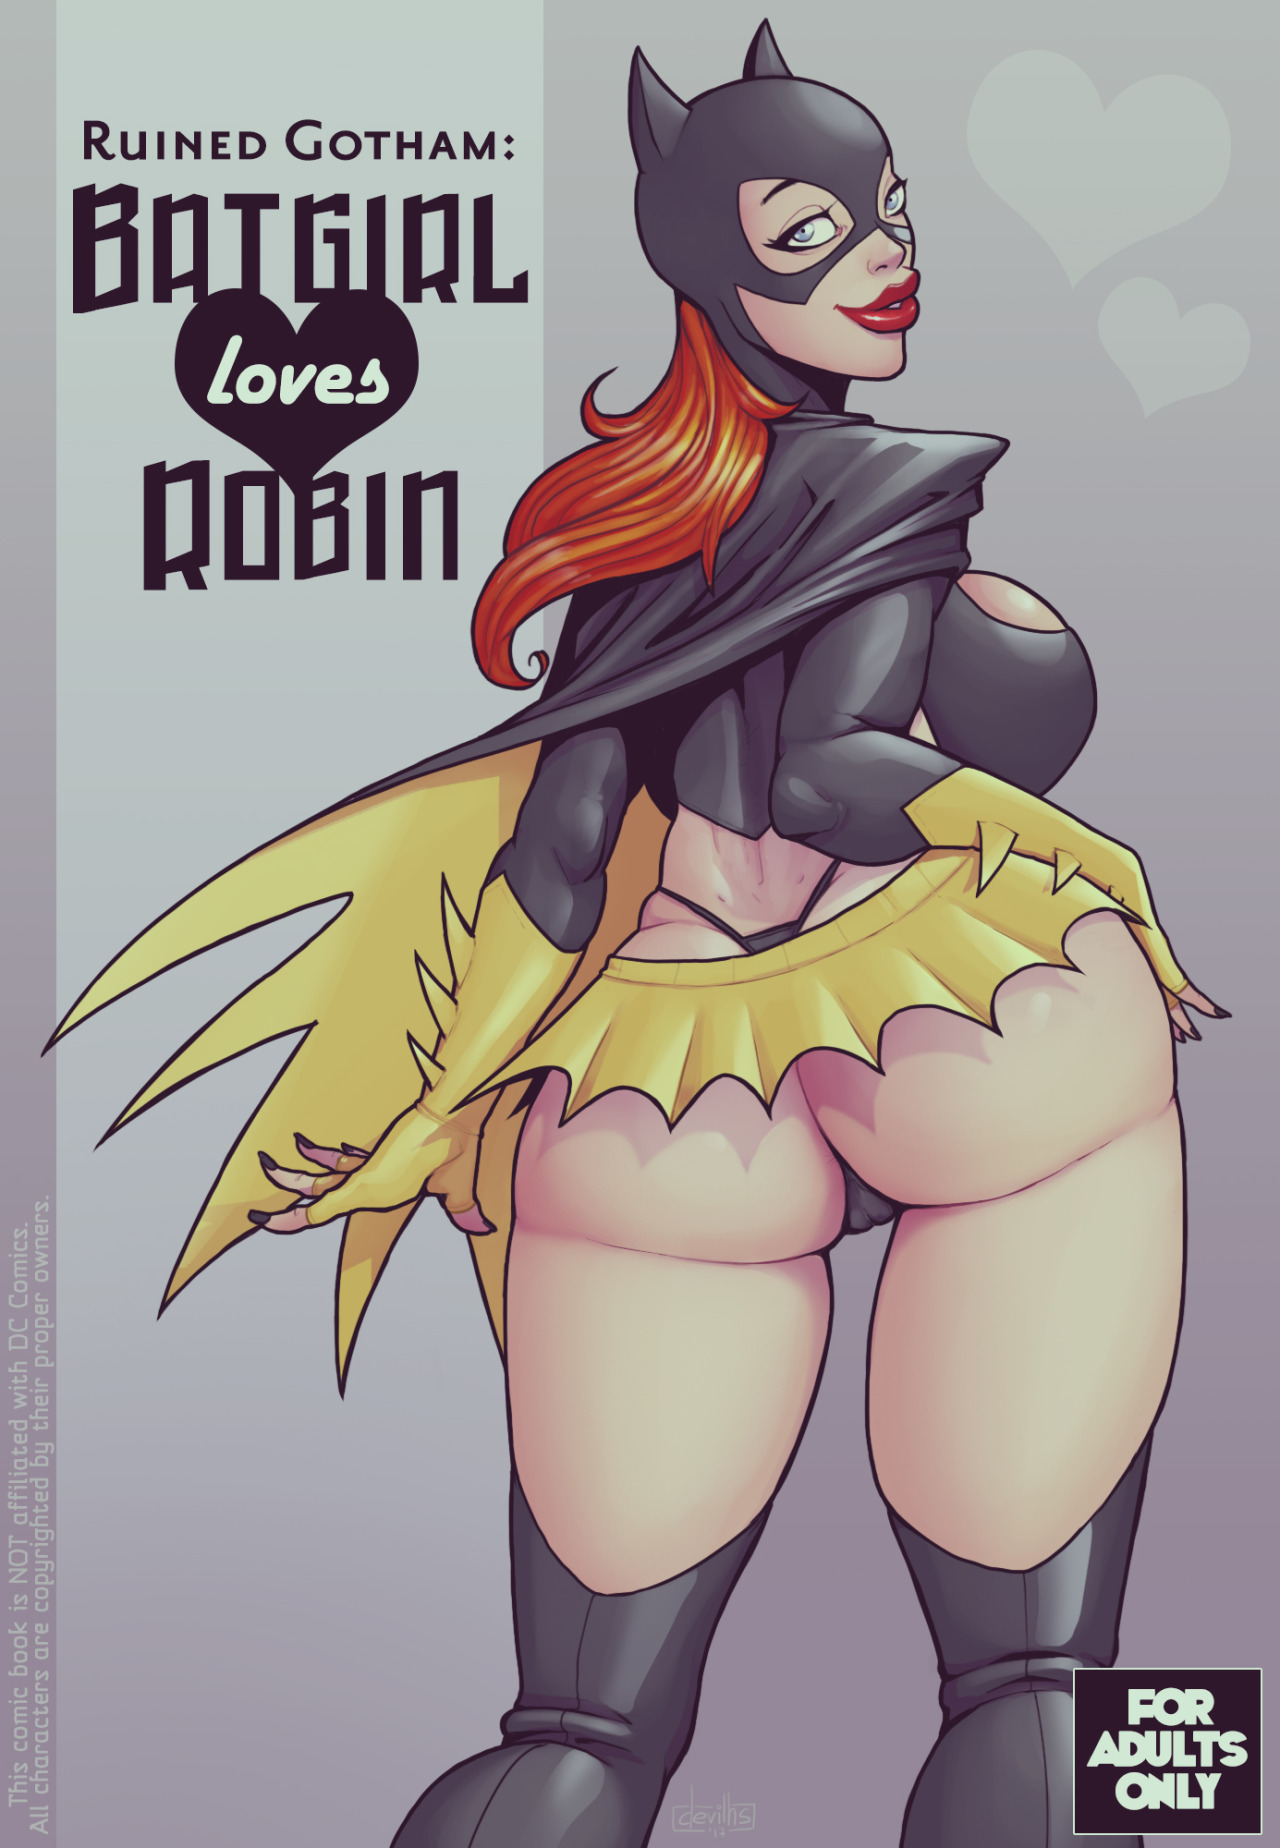 Sexy batgirl in DevilHS Ruined Gotham Batgirl loves Robin Ongoing Porn Comics